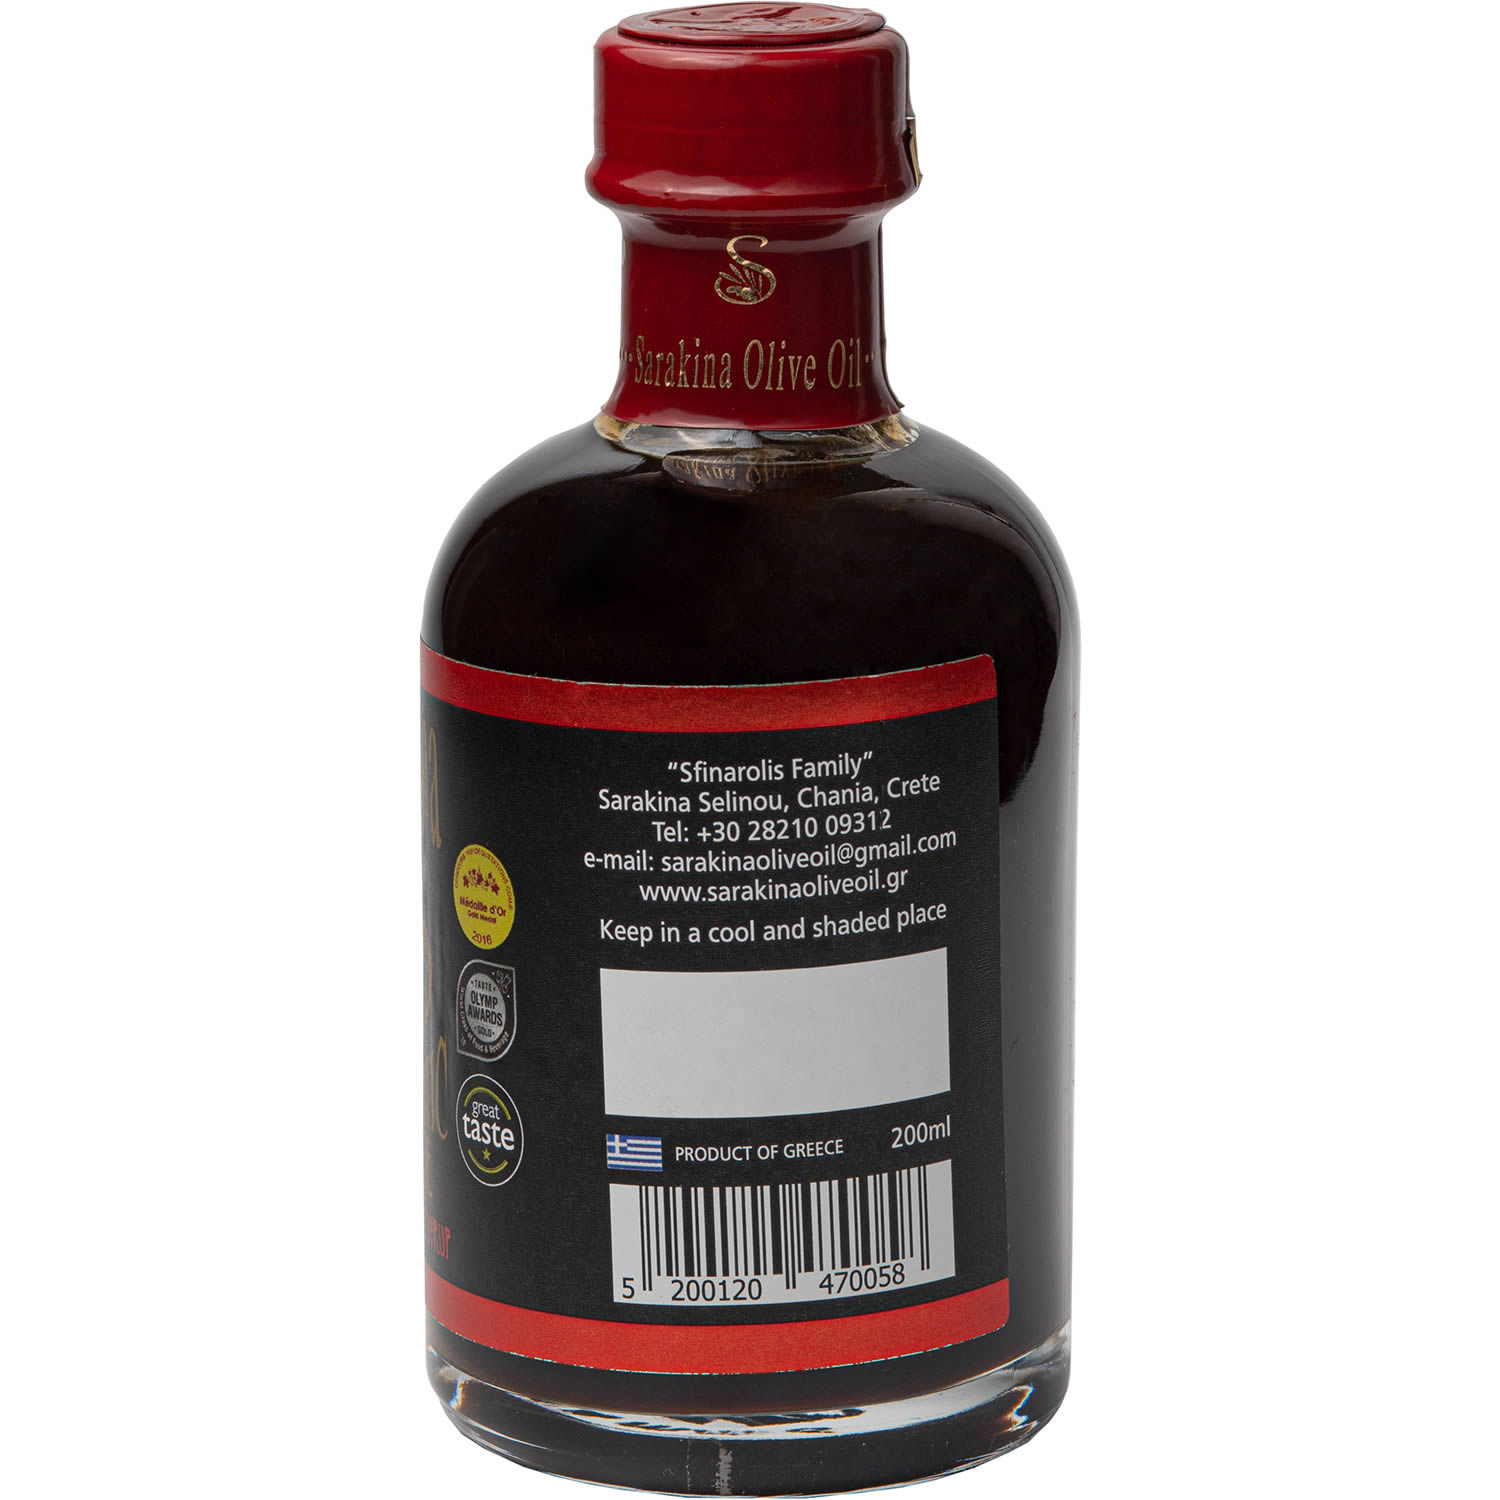 Sarakina - Balsamico Sauce mit Petimezi (Traubensirup) 200 ml